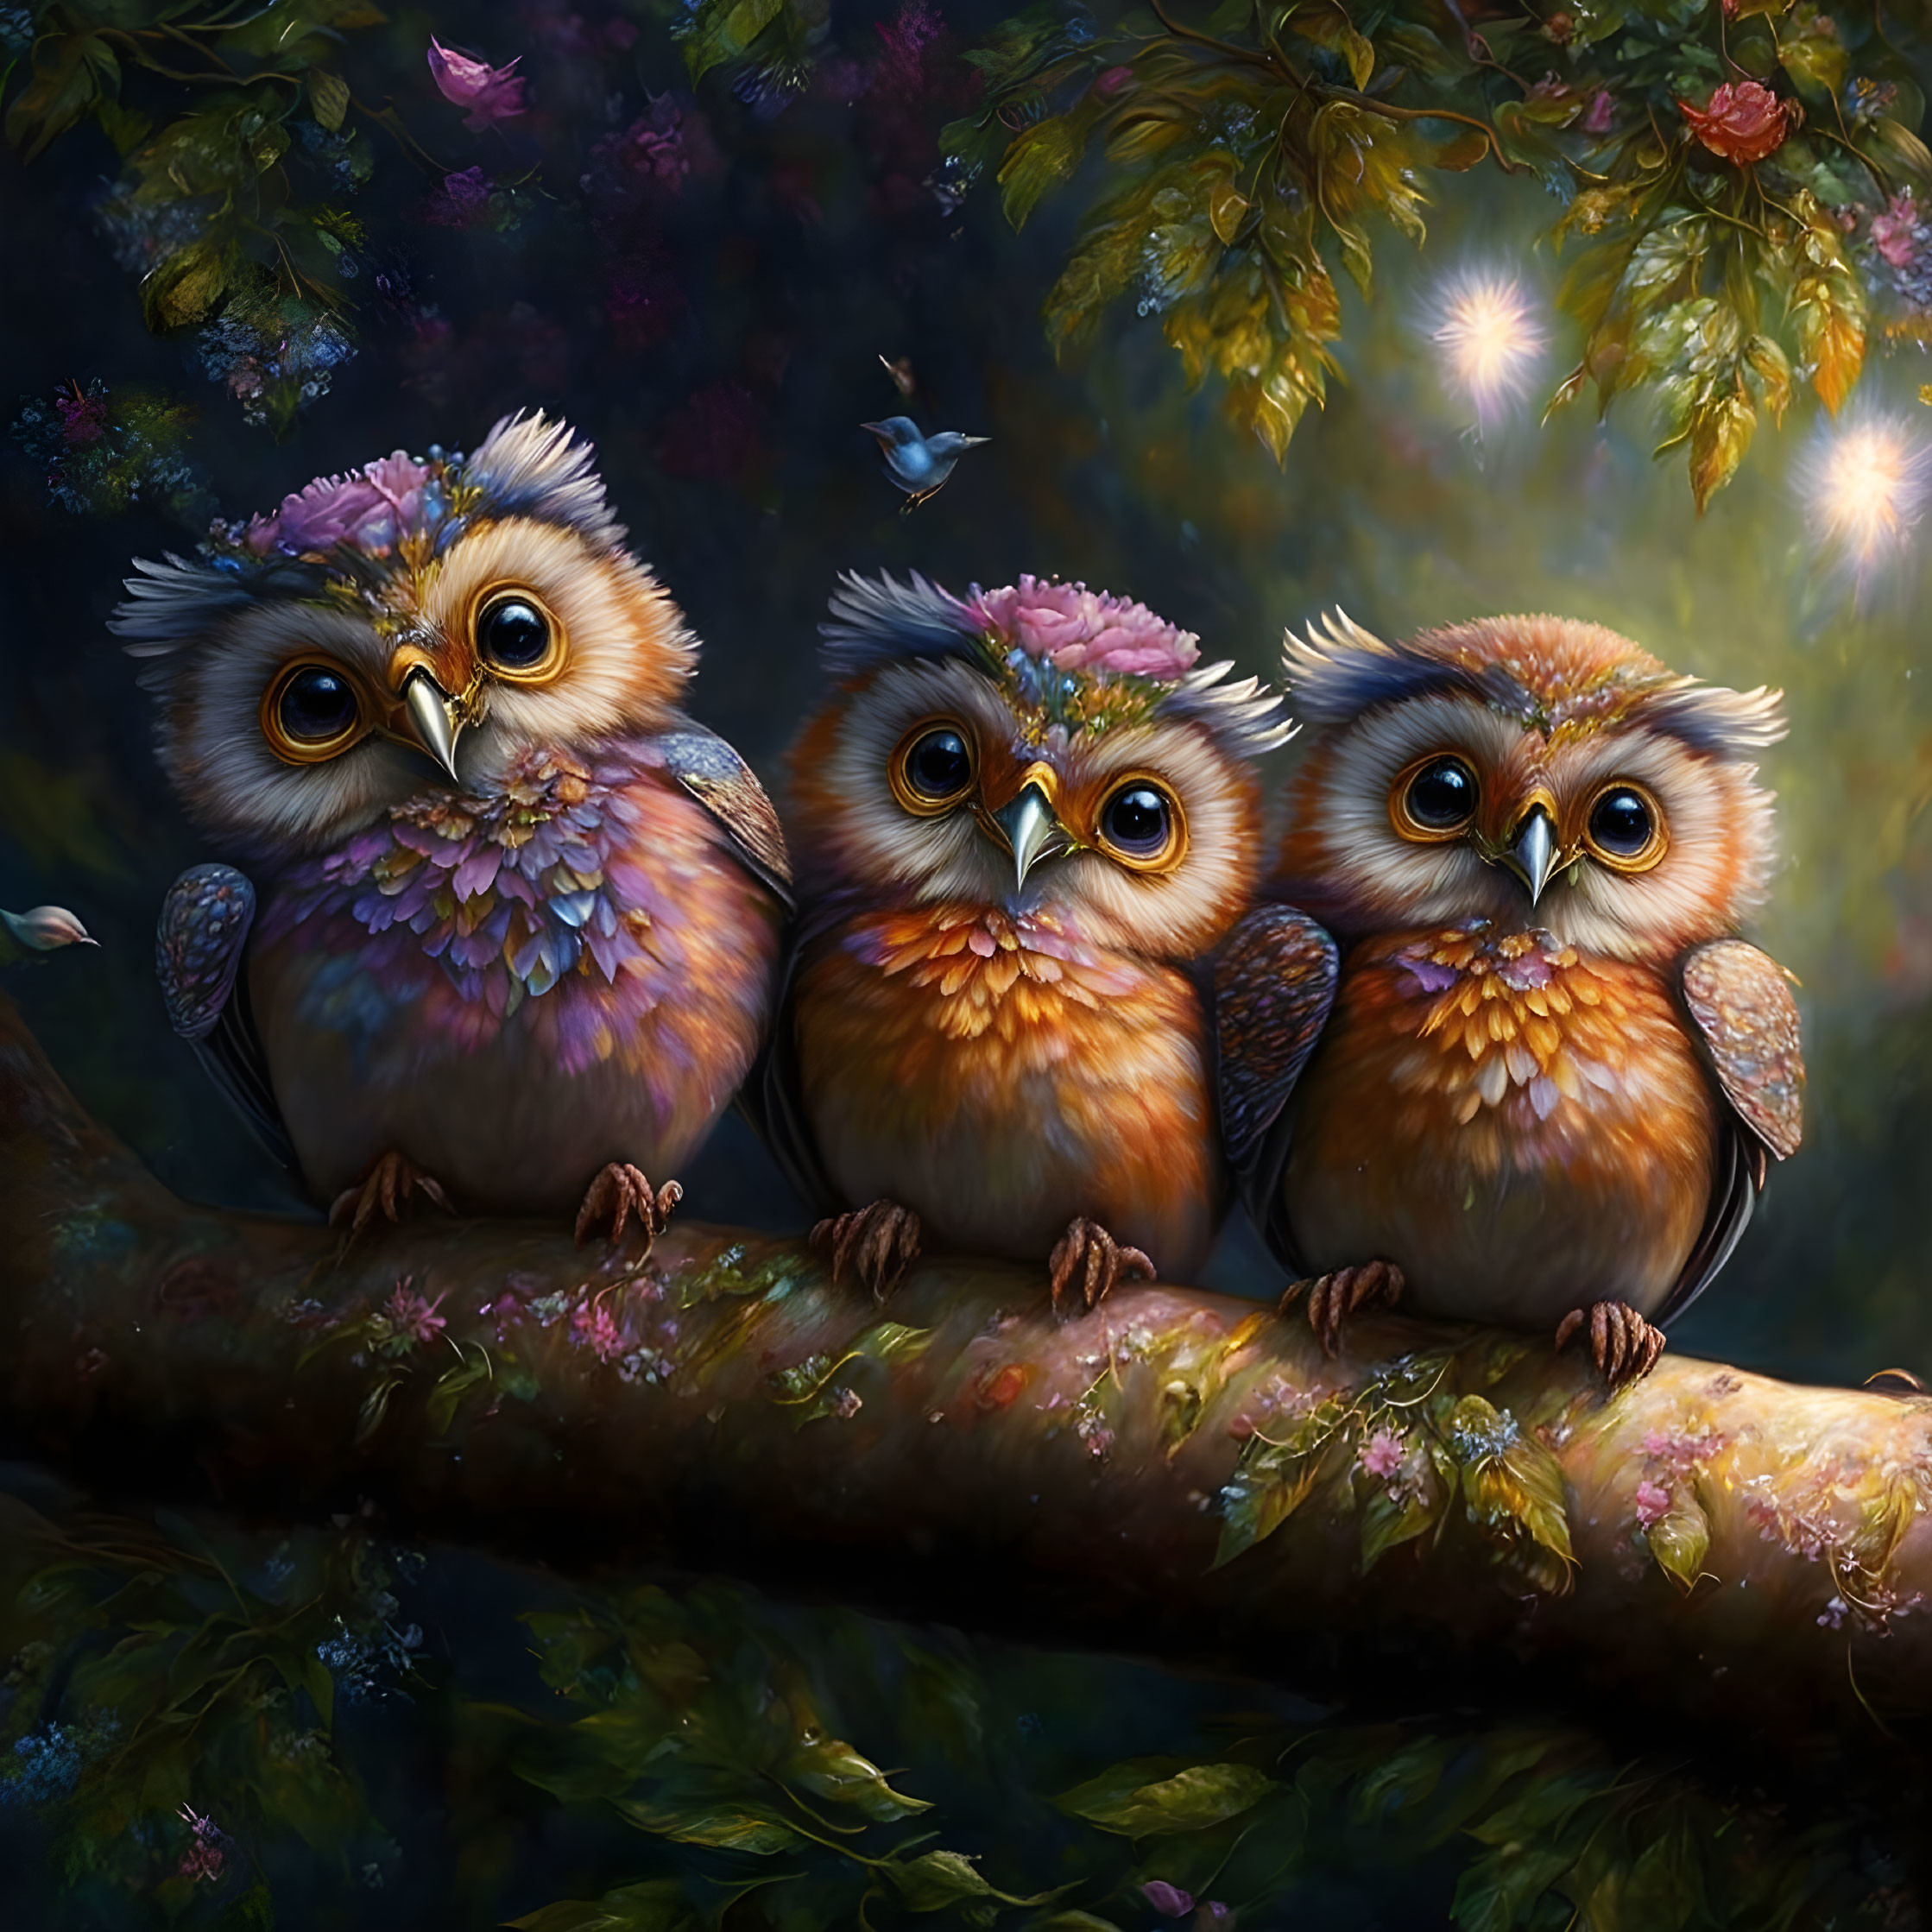 Three little Owls